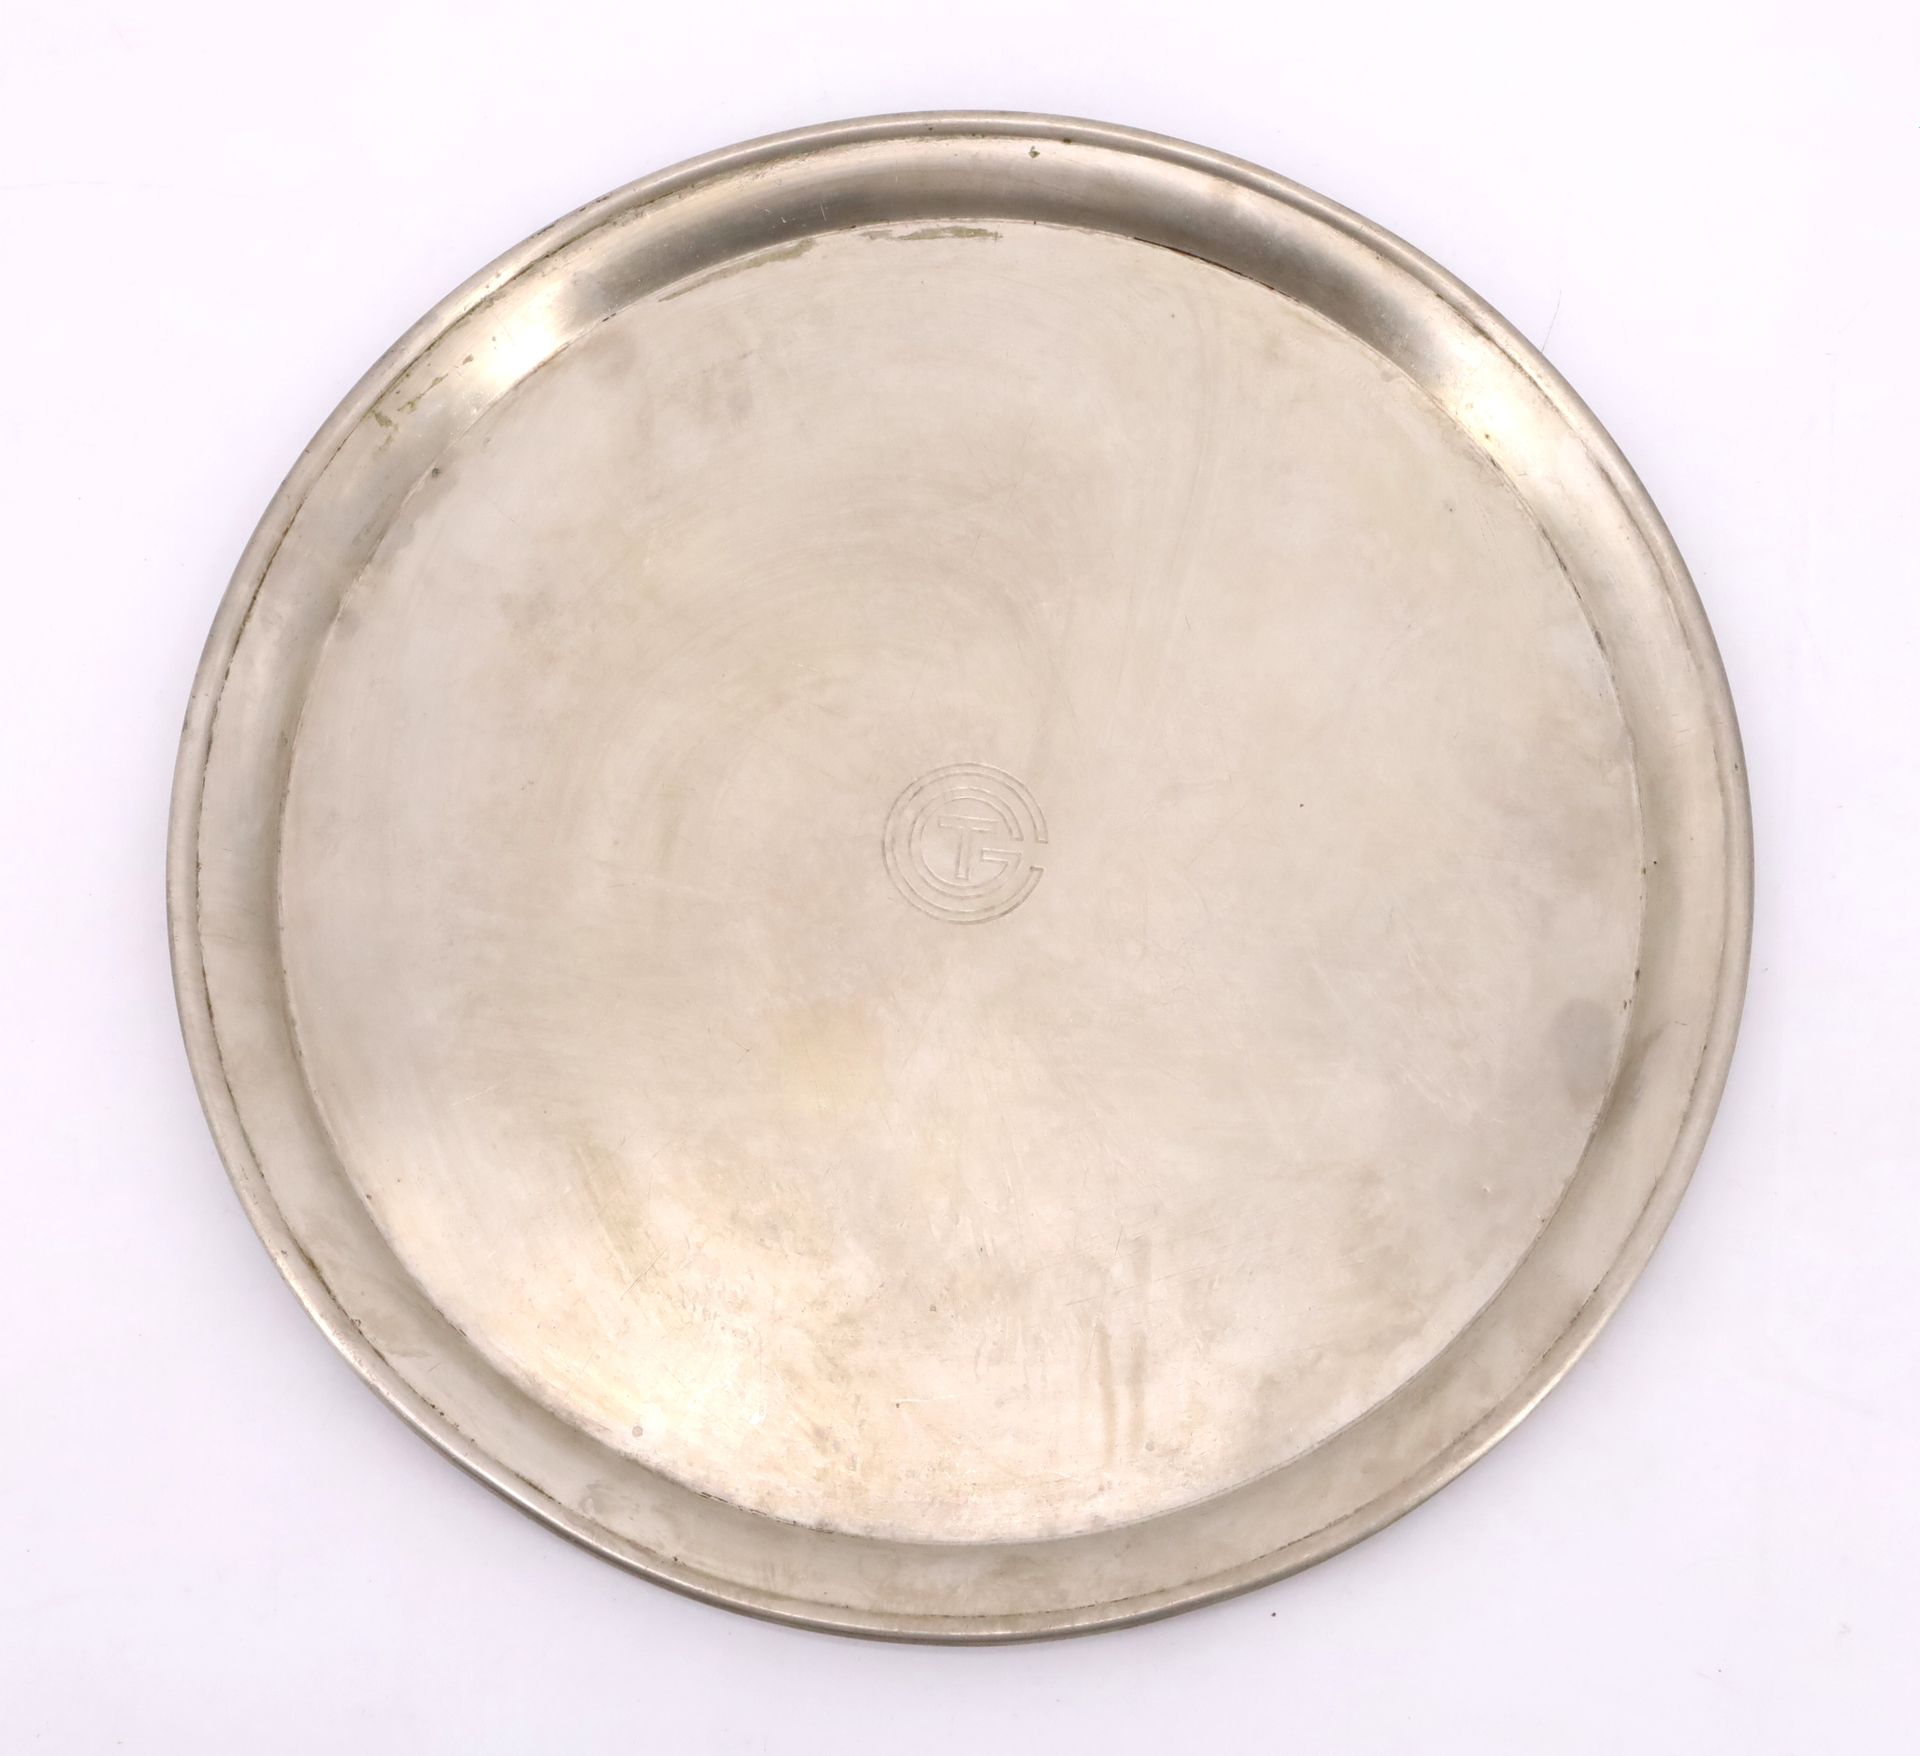 Null CGT诺曼底号圆形银盘，中间是诺曼底号邮轮使用的字样。Christofle之家的作品。直径40厘米。因使用而产生的划痕